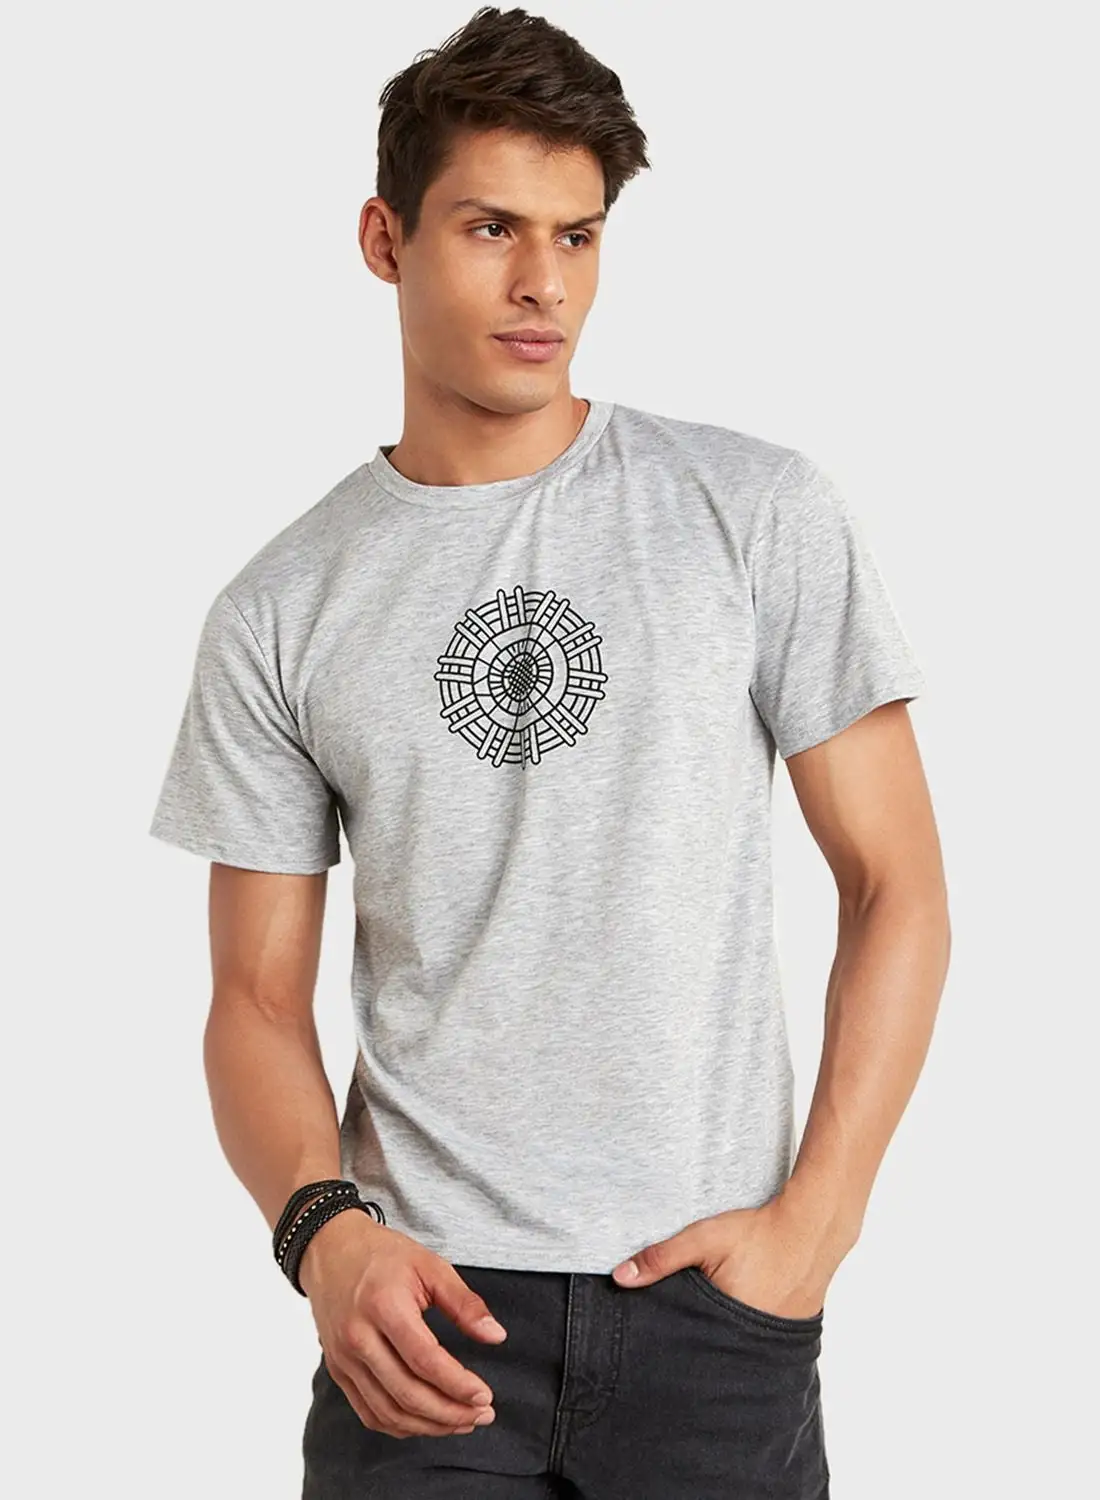 Styli Graphic Print Crew Neck T-Shirt